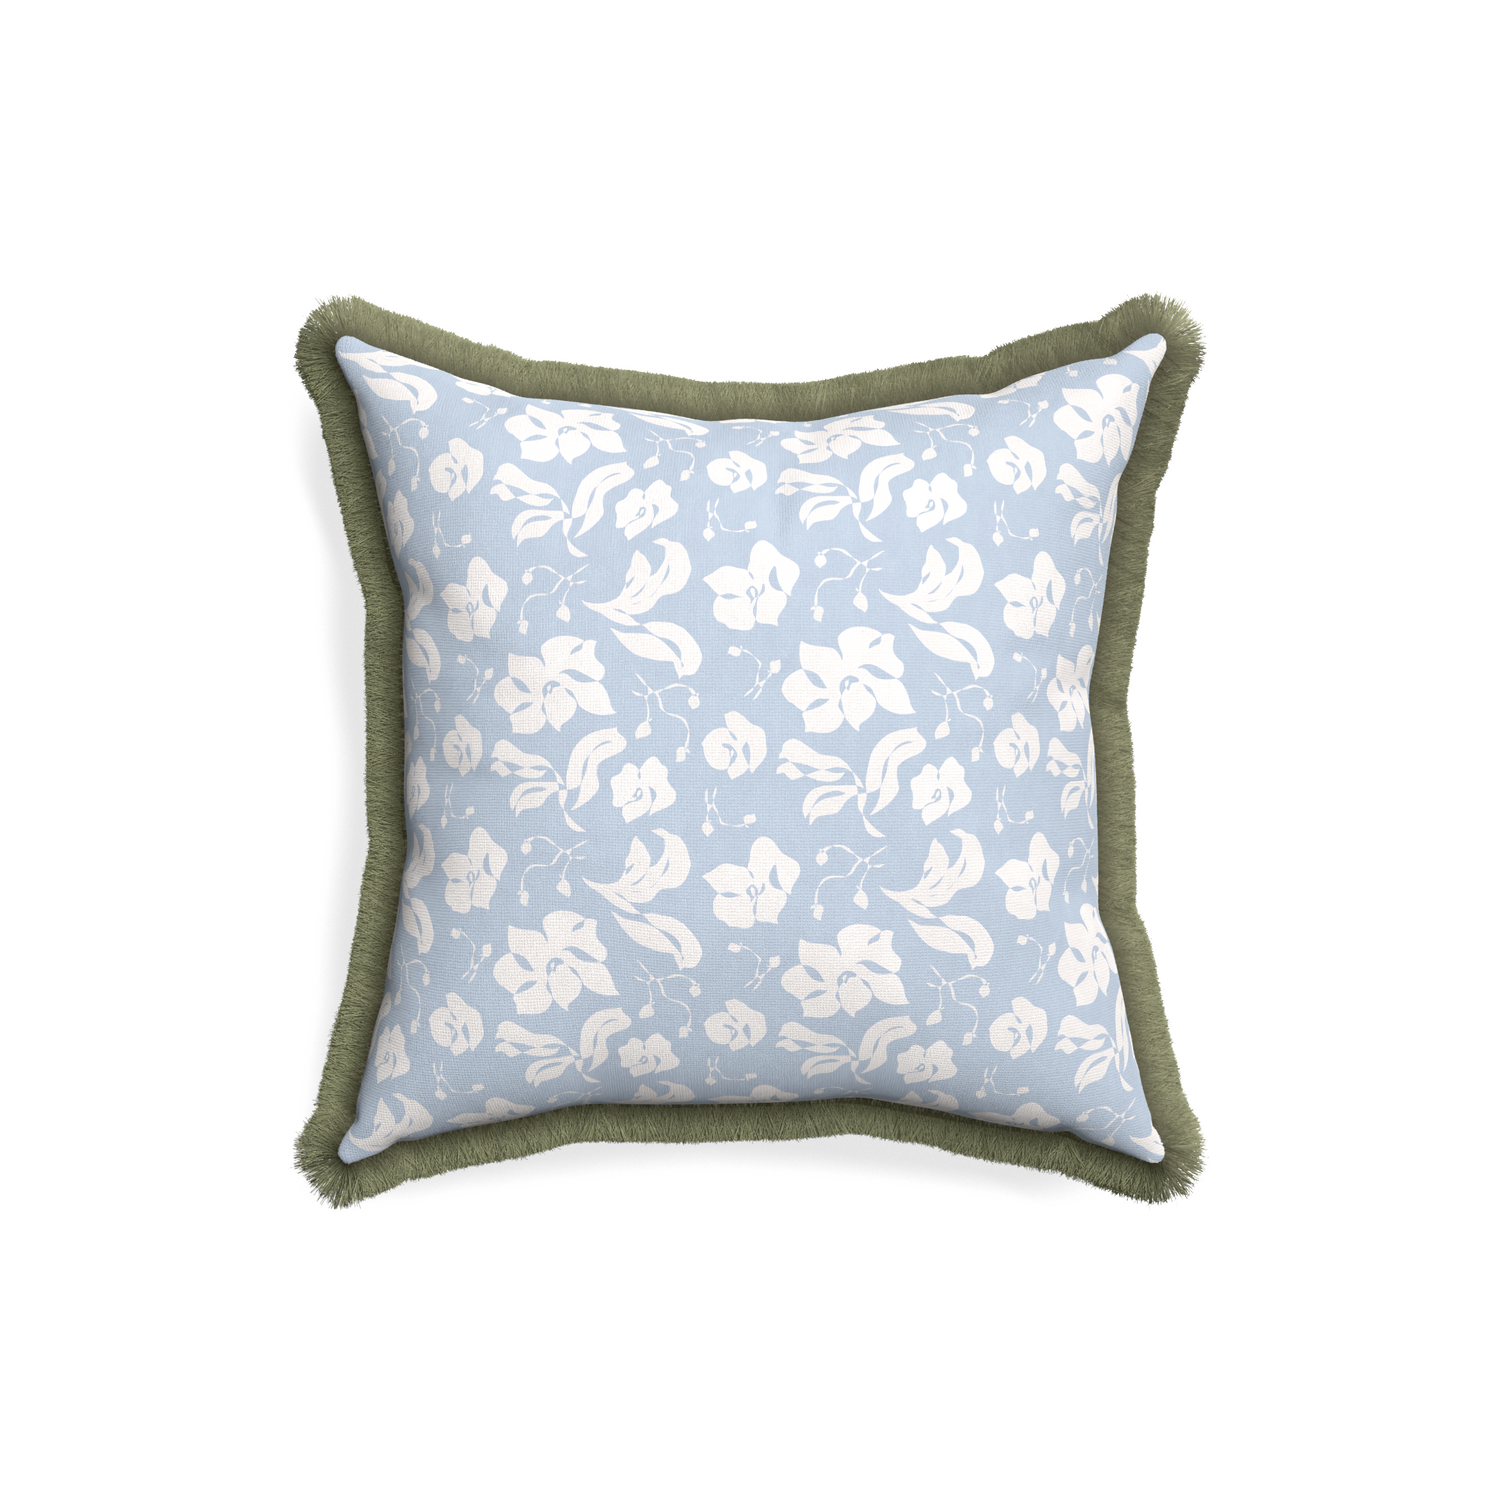 18-square georgia custom pillow with sage fringe on white background